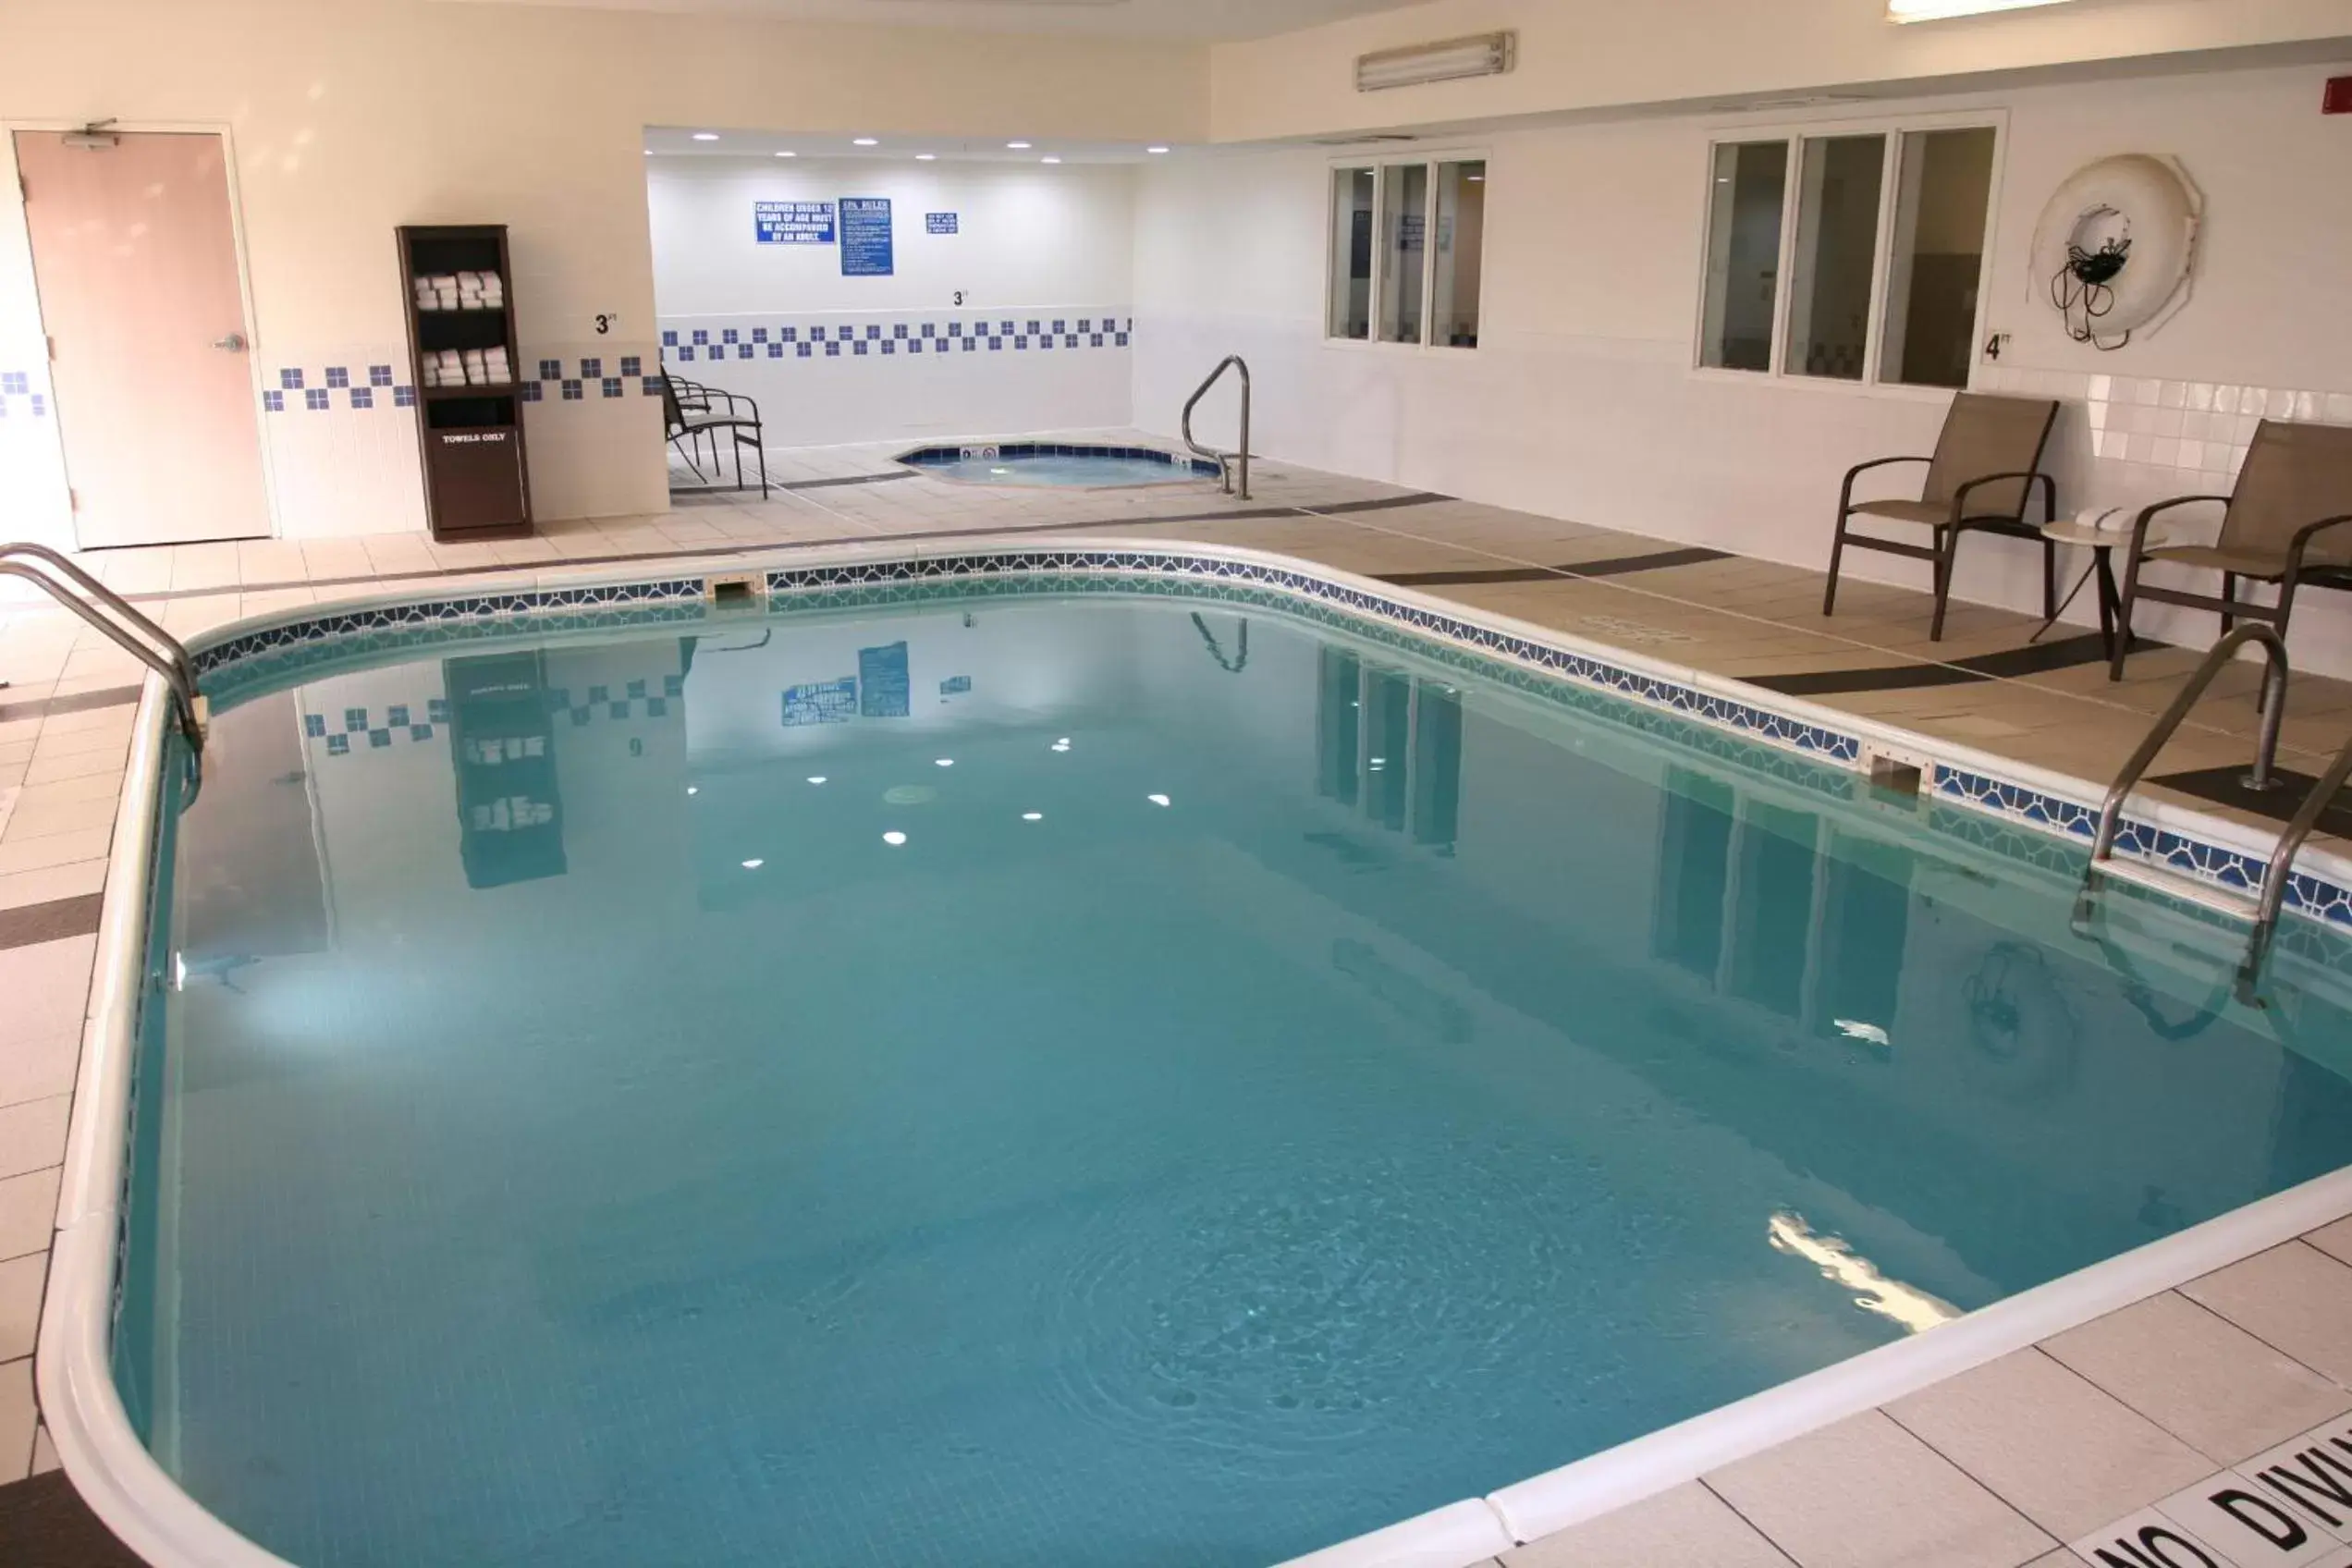 On site, Swimming Pool in Comfort Inn Wichita Falls near University